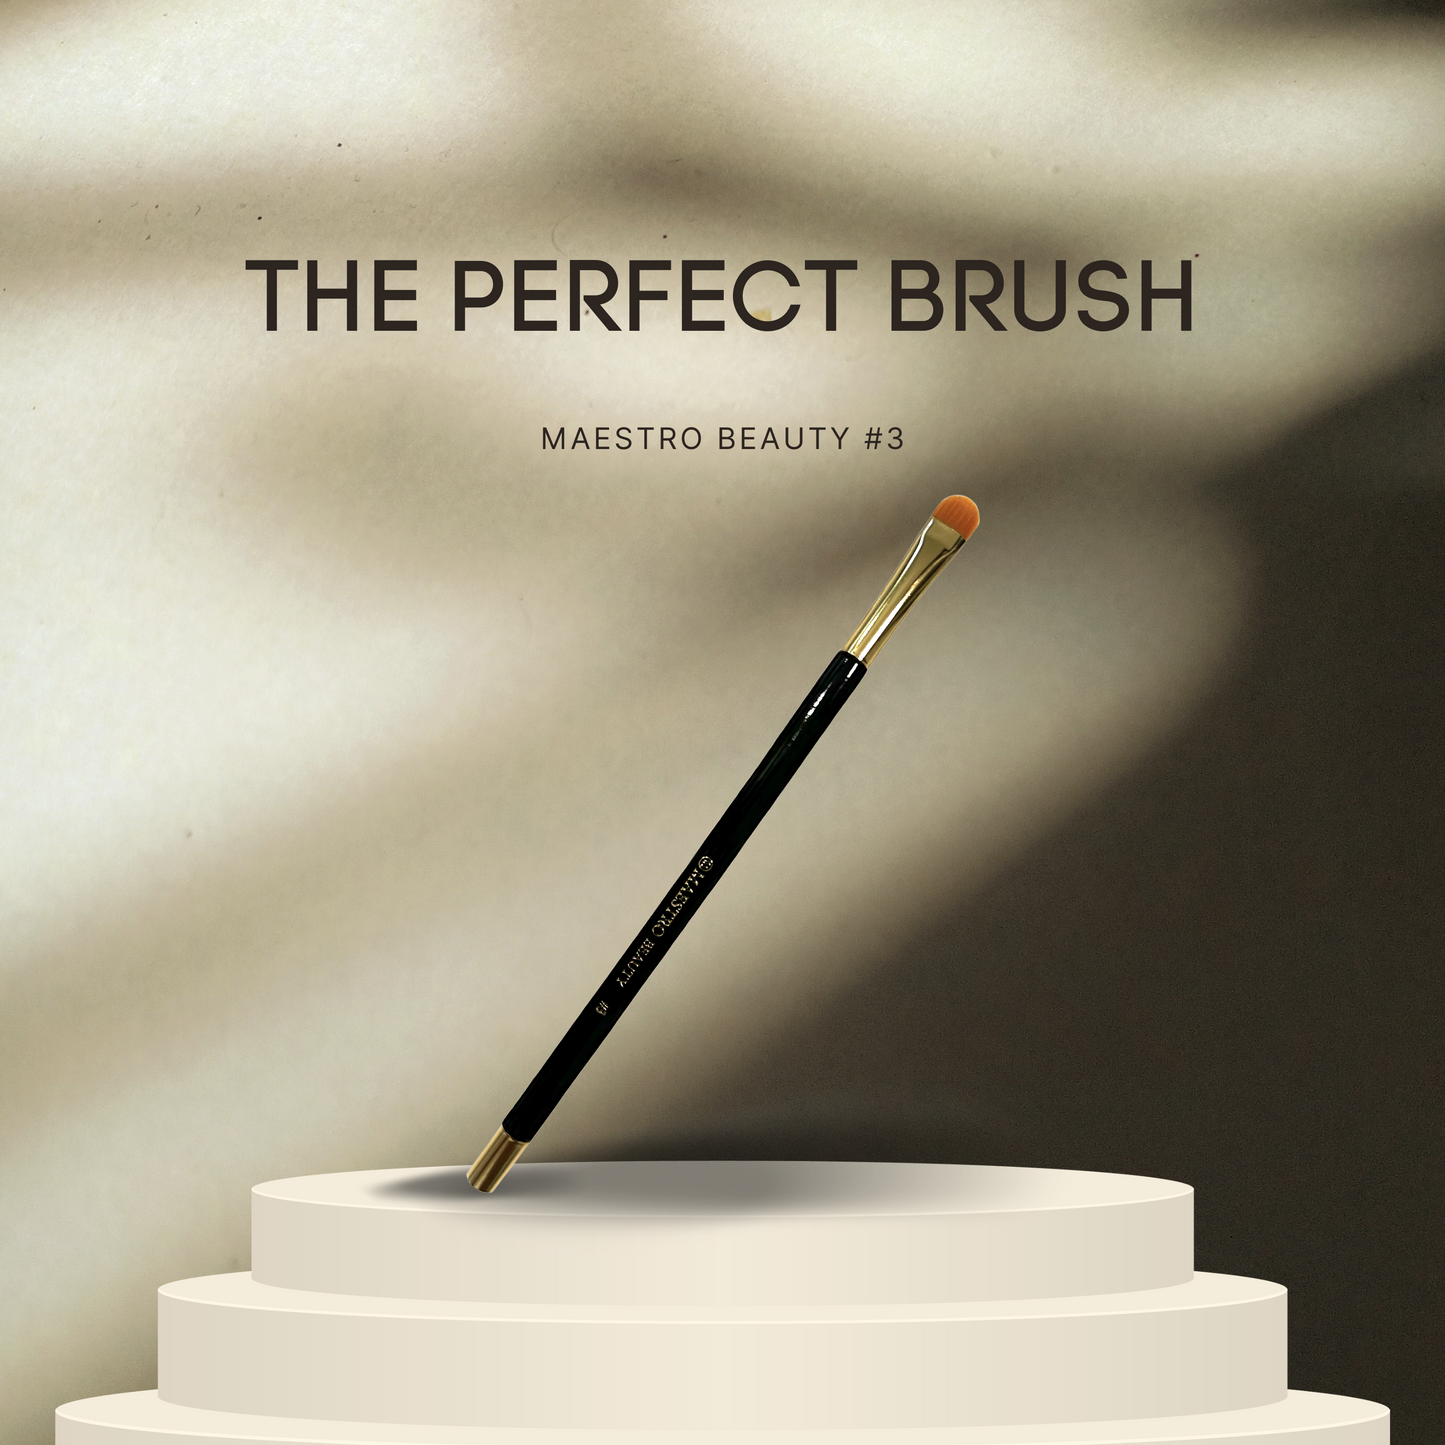 Maestro Beauty Brush #3